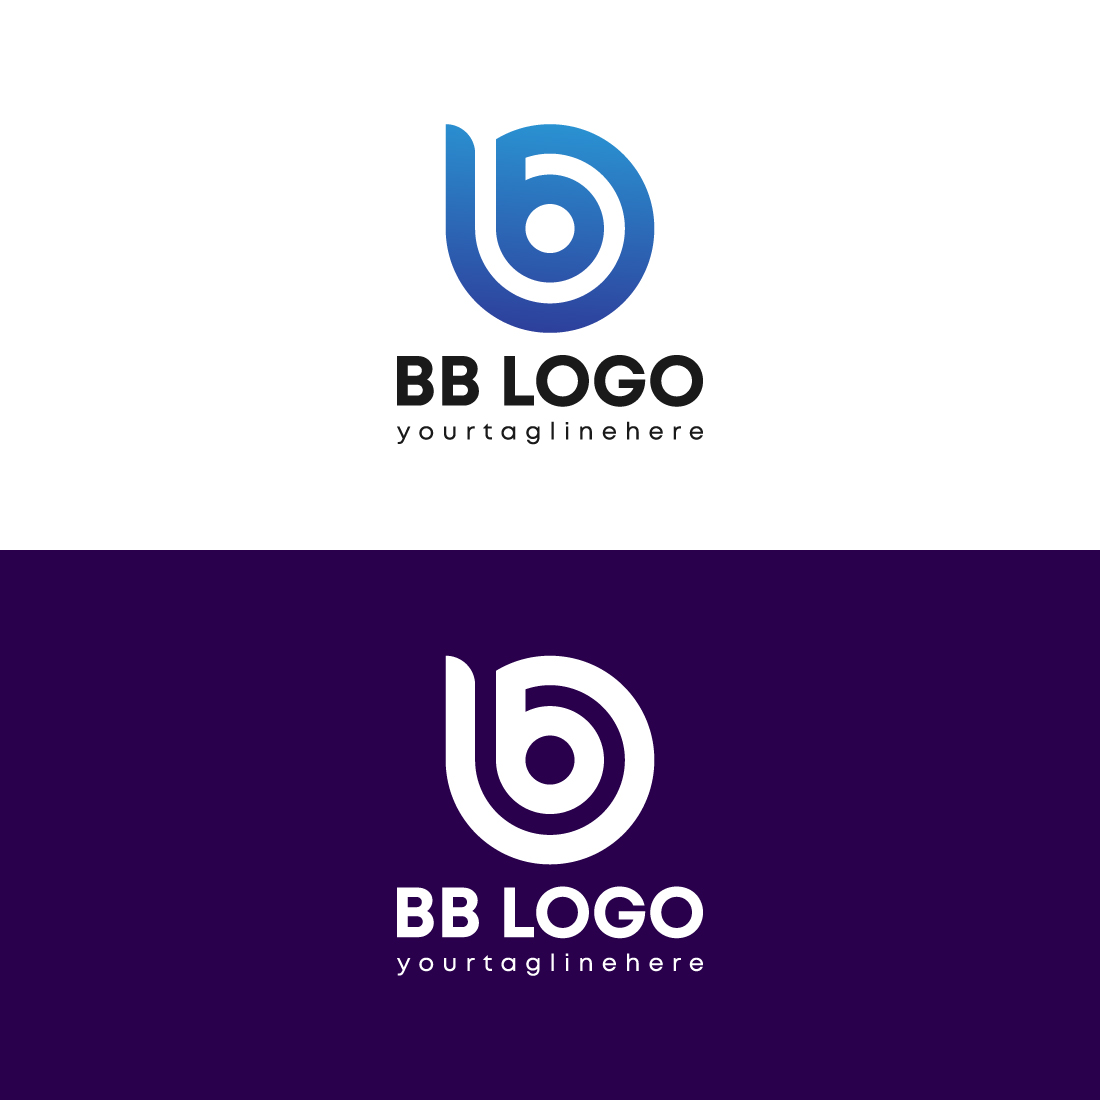 BB logo preview image.